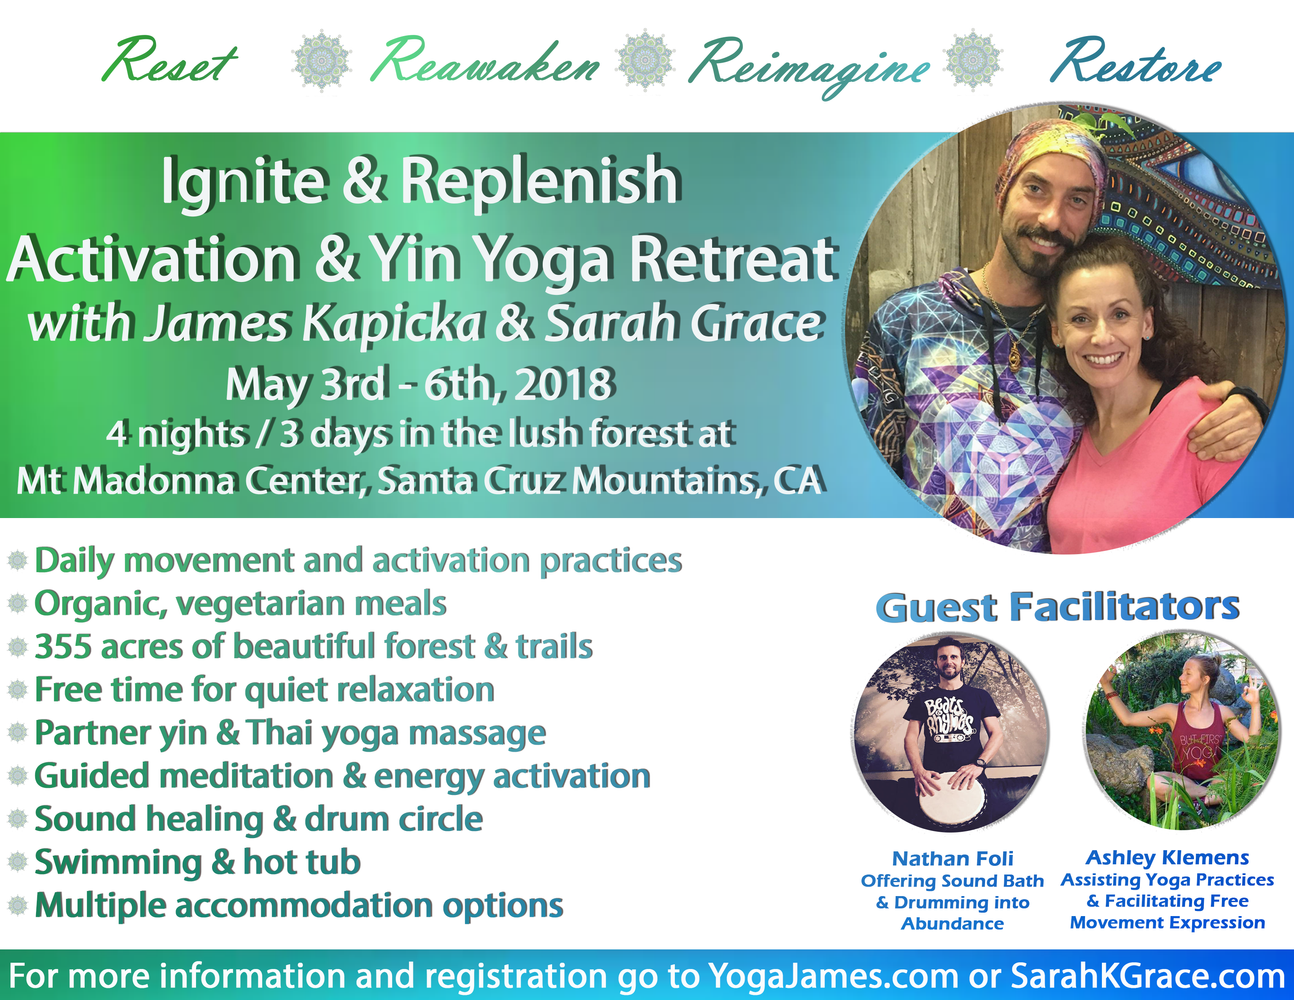 Ignite & Replenish - Activation & Yin Yoga Retreat